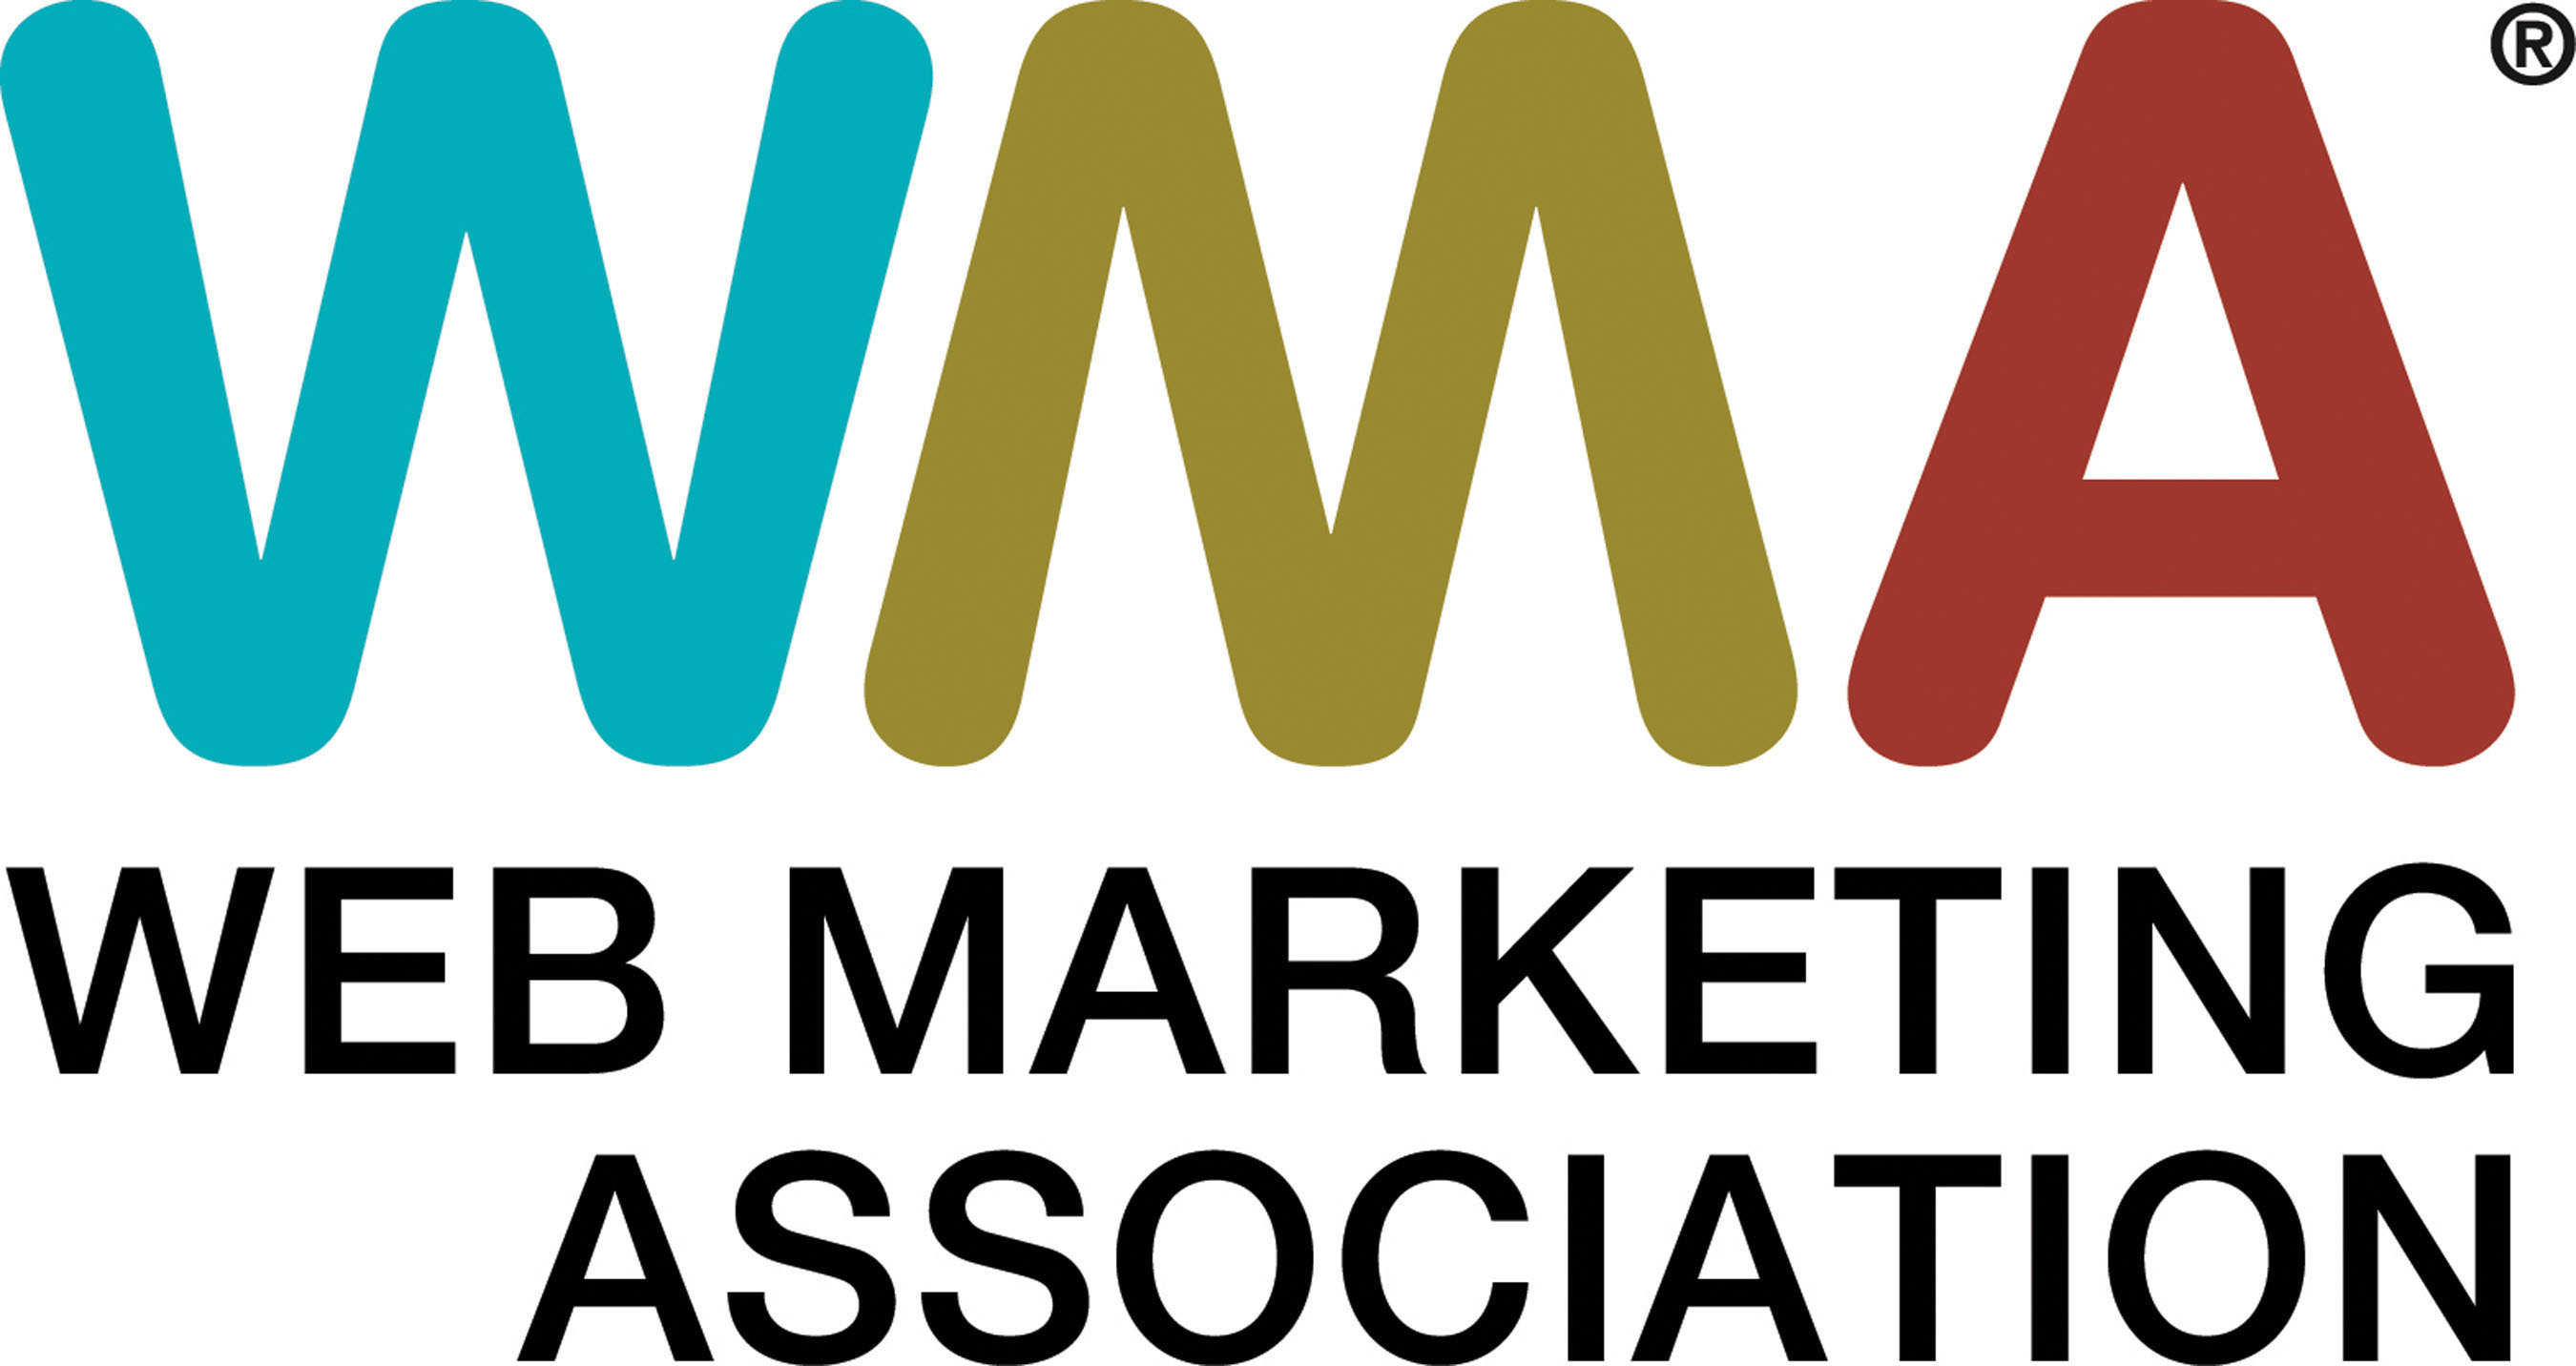 Web Marketing Association. (PRNewsFoto/Web Marketing Association) (PRNewsFoto/WEB MARKETING ASSOCIATION)